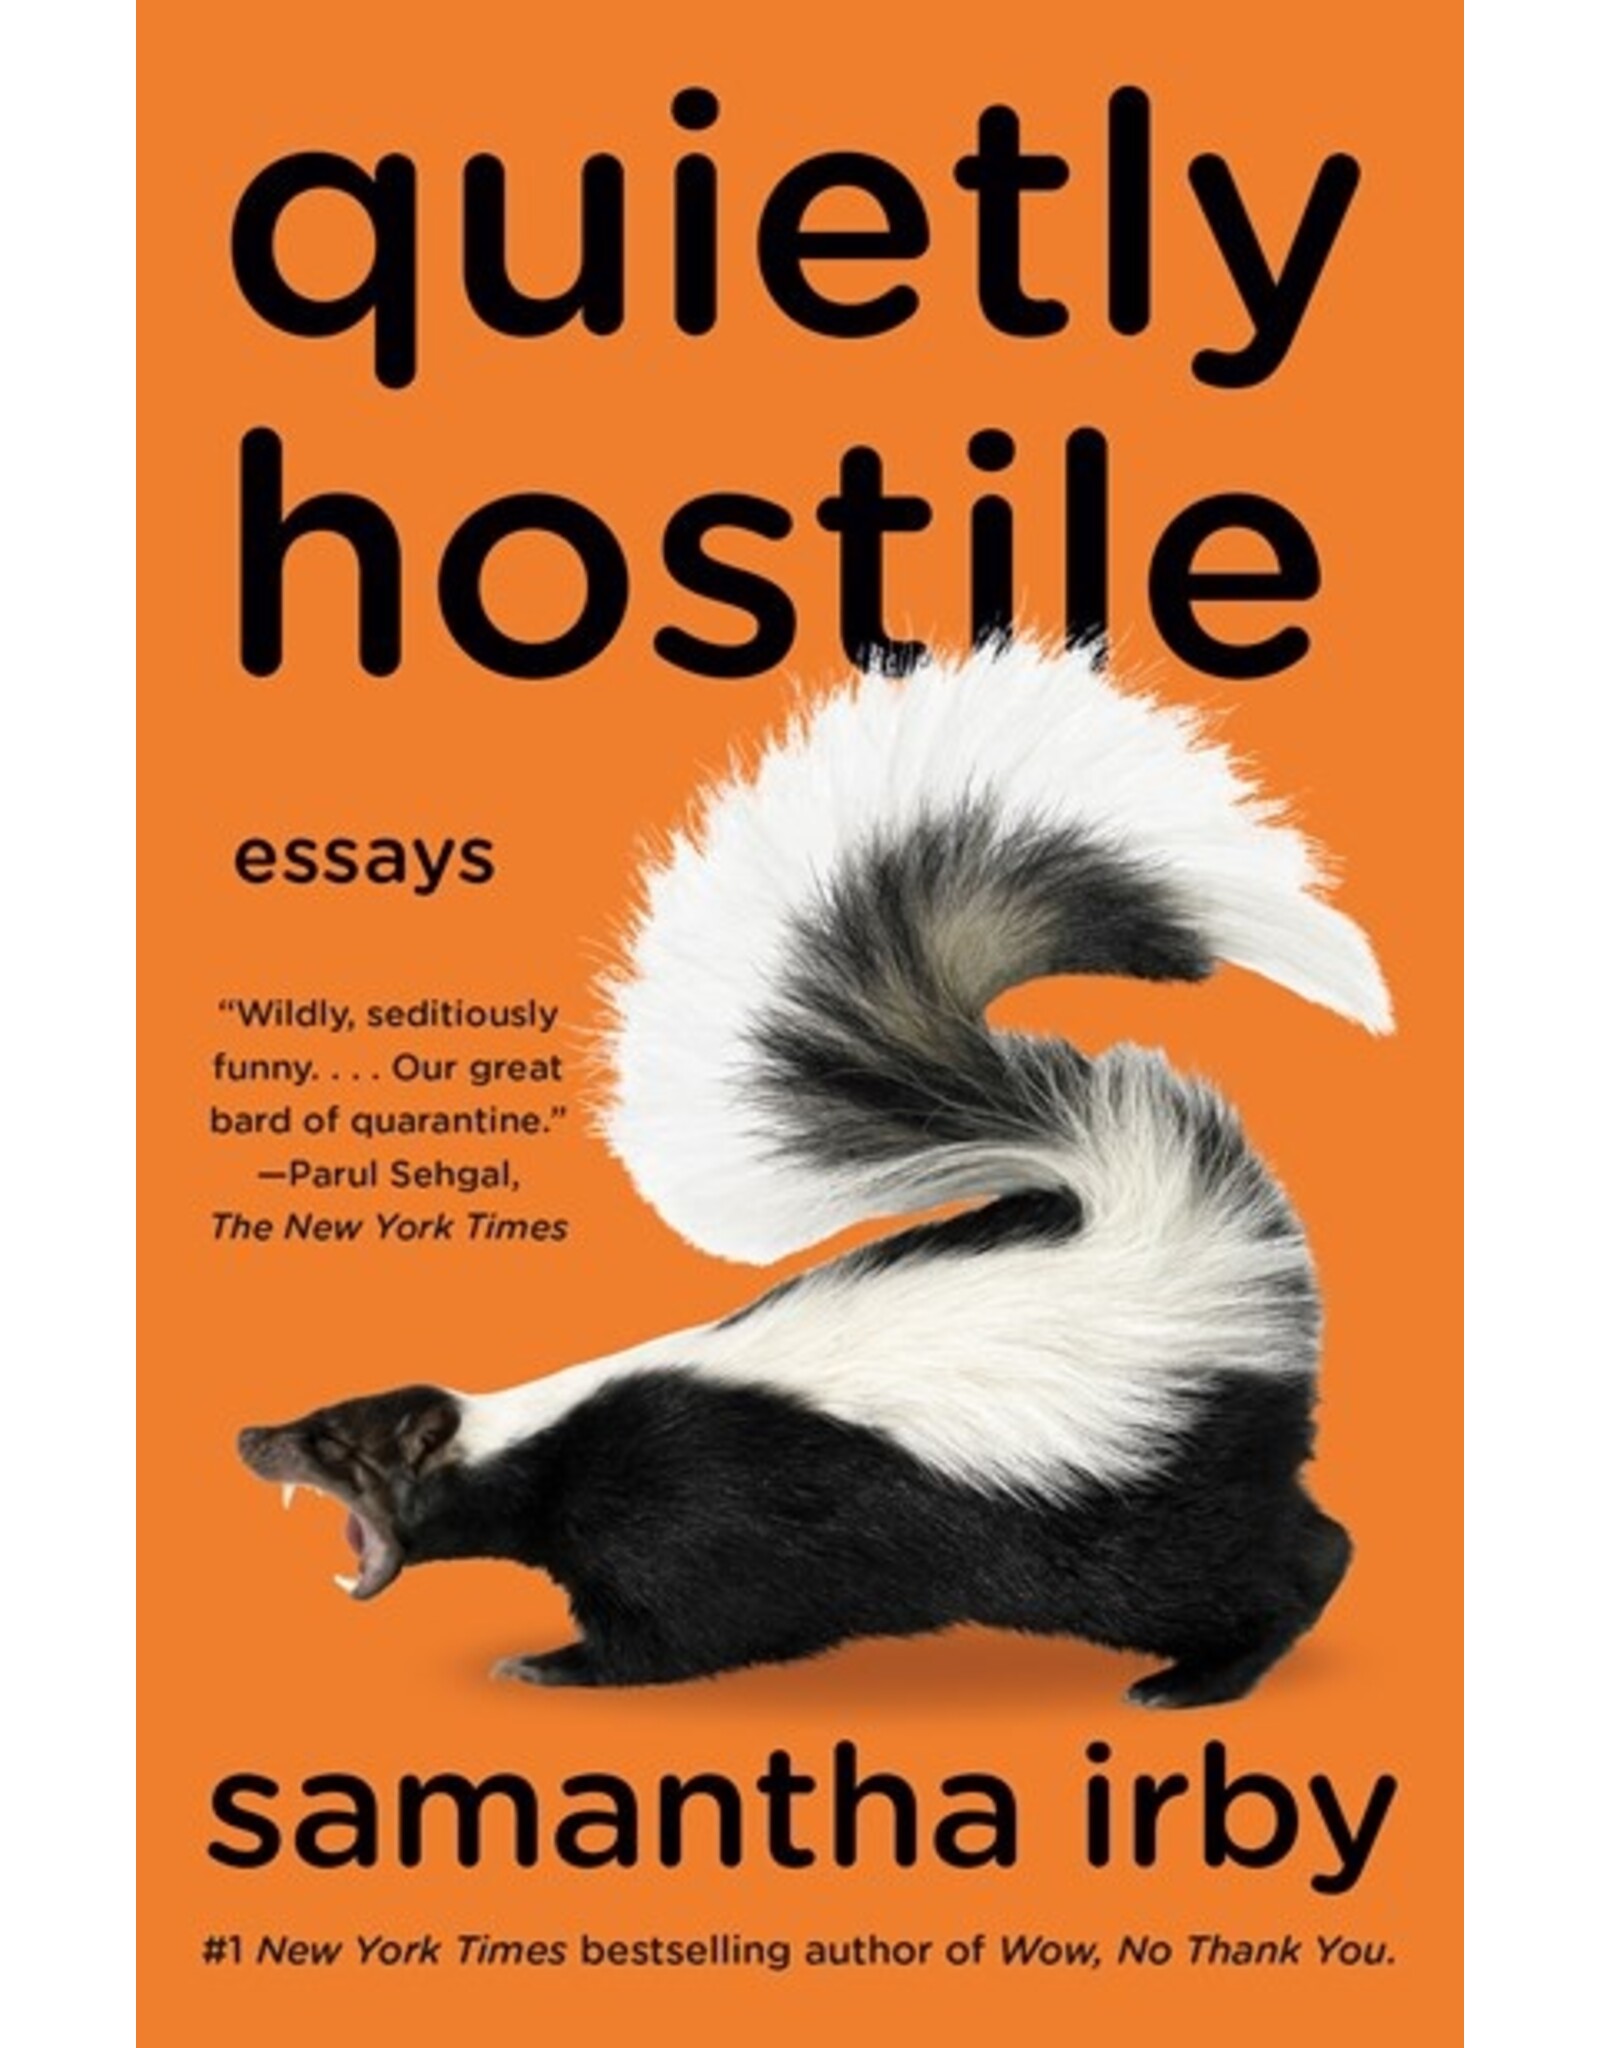 Books quietly hostile : Essays by samantha irby